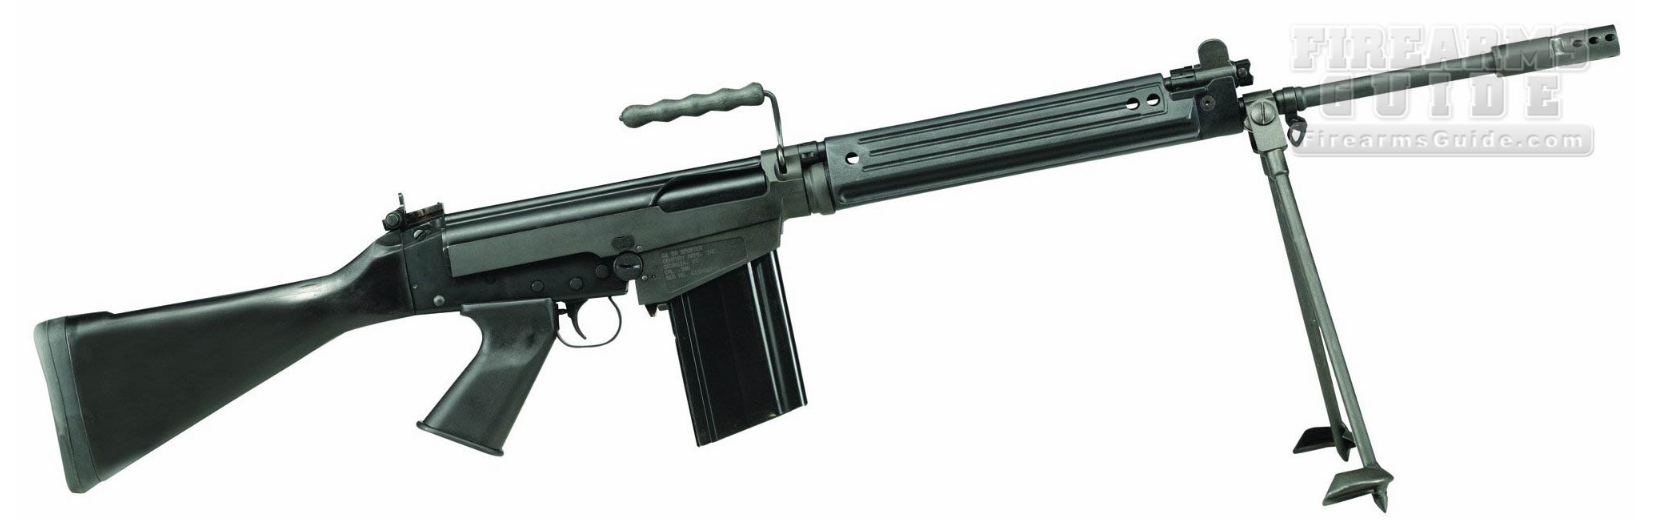 Century G1 Semi-Auto Sporter Rifle